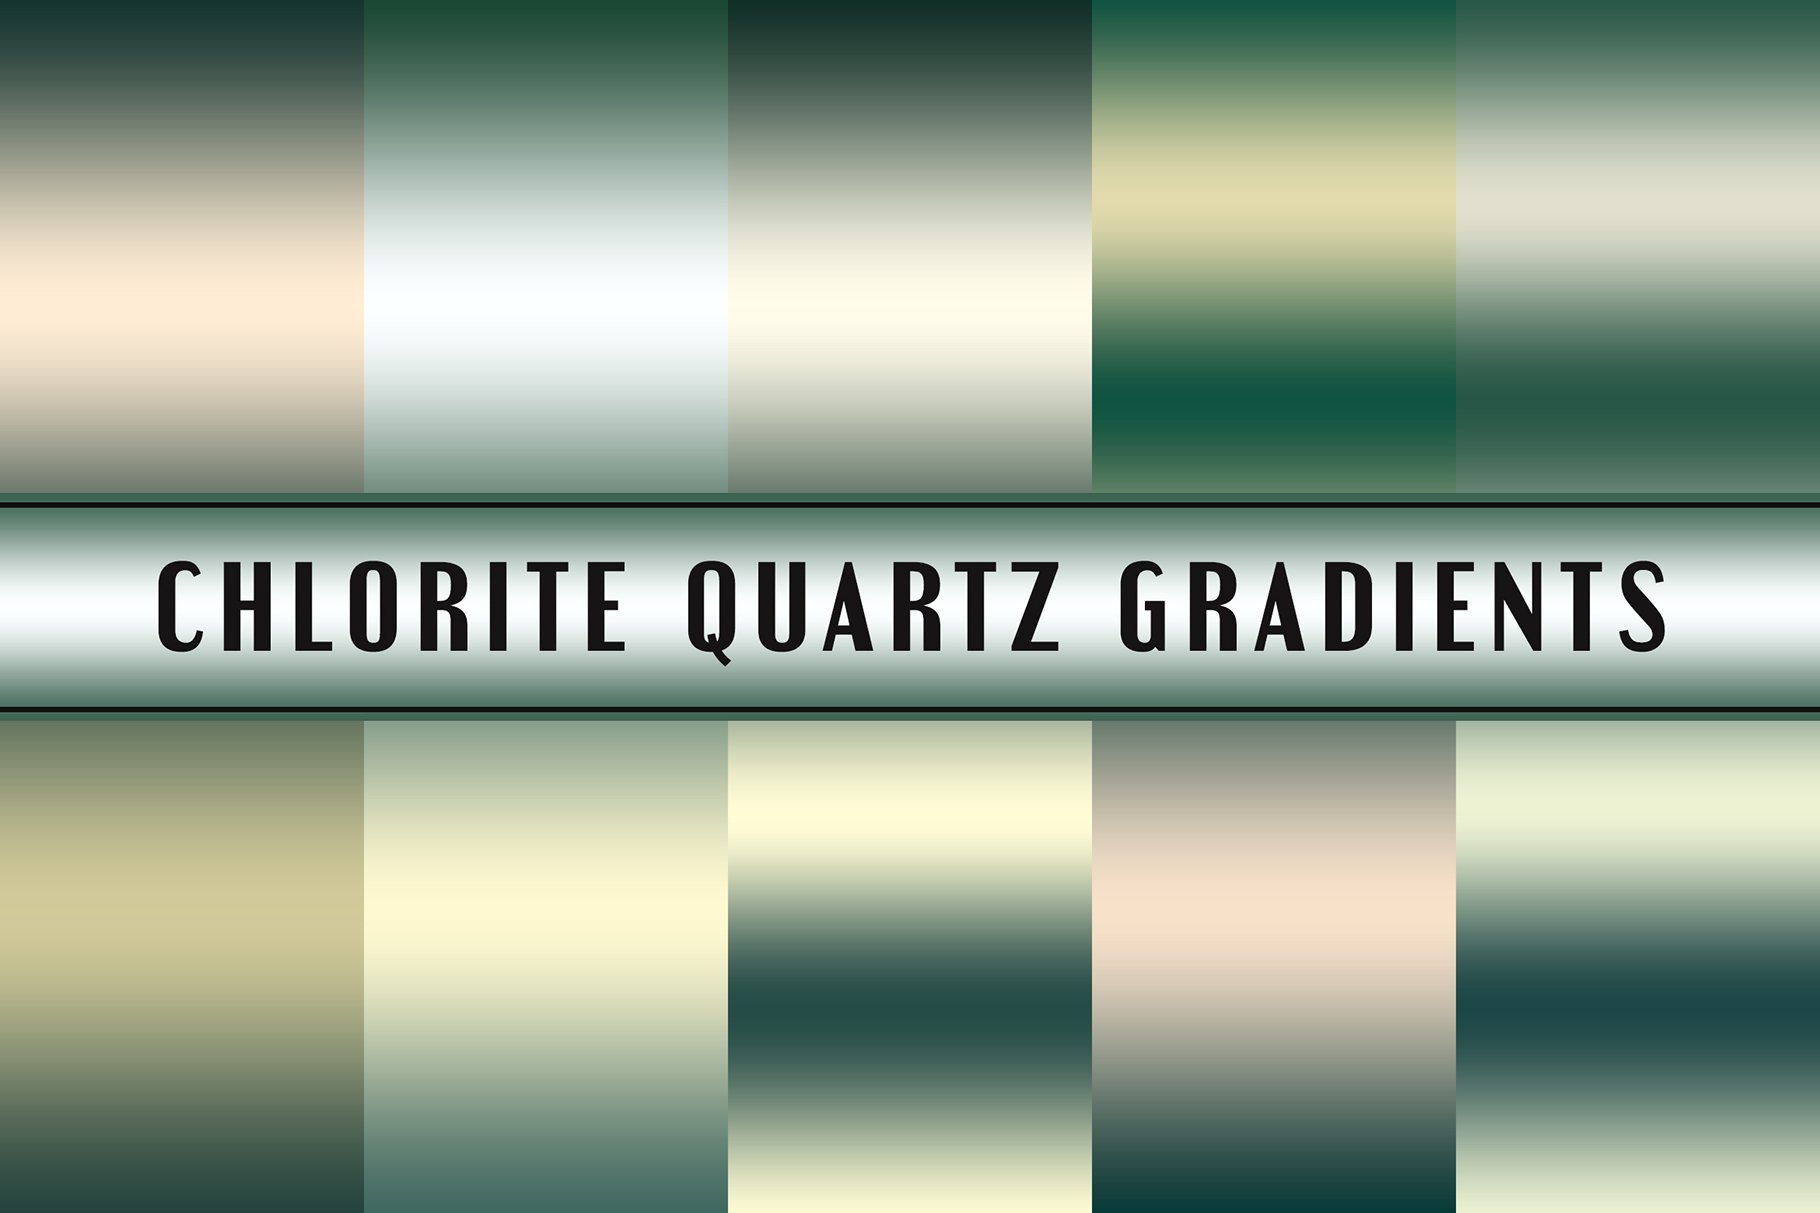 Chlorite Quartz Gradients cover image.